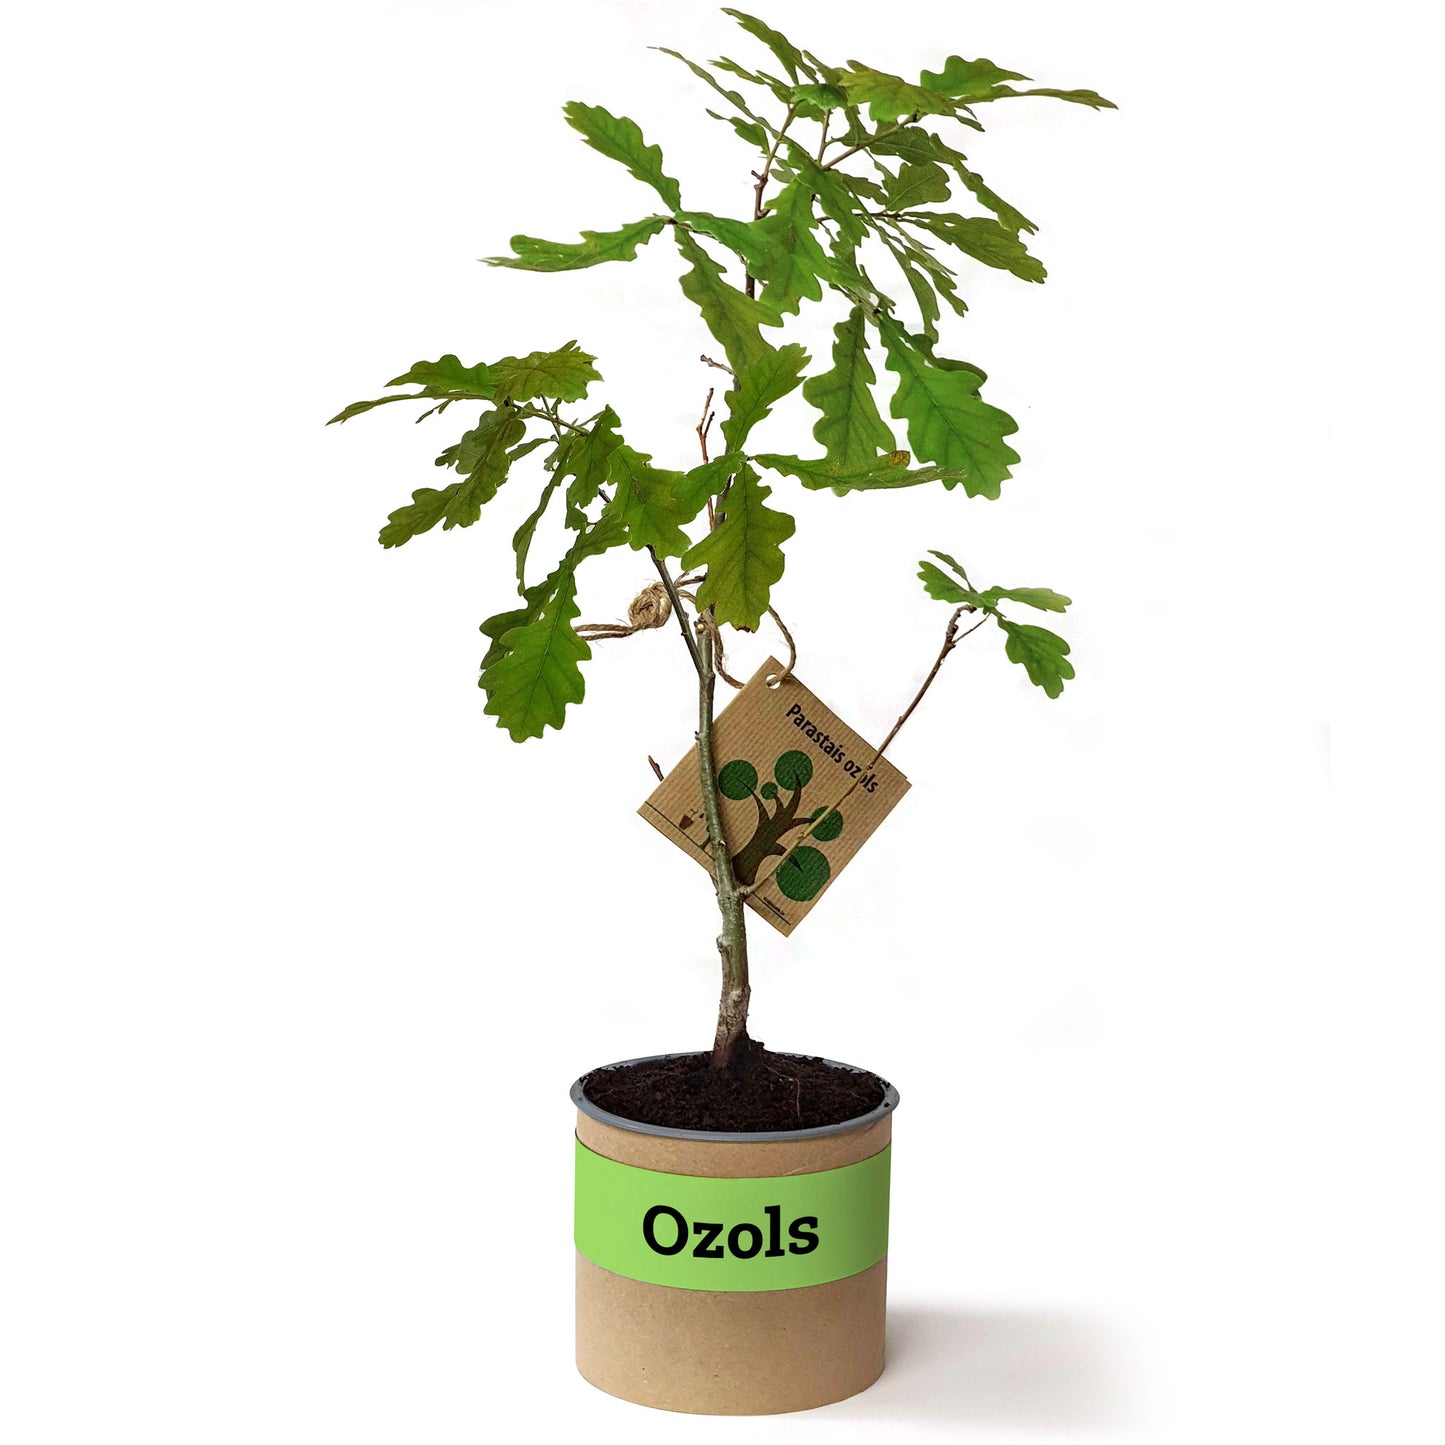 Oak or linden in a cardboard pot